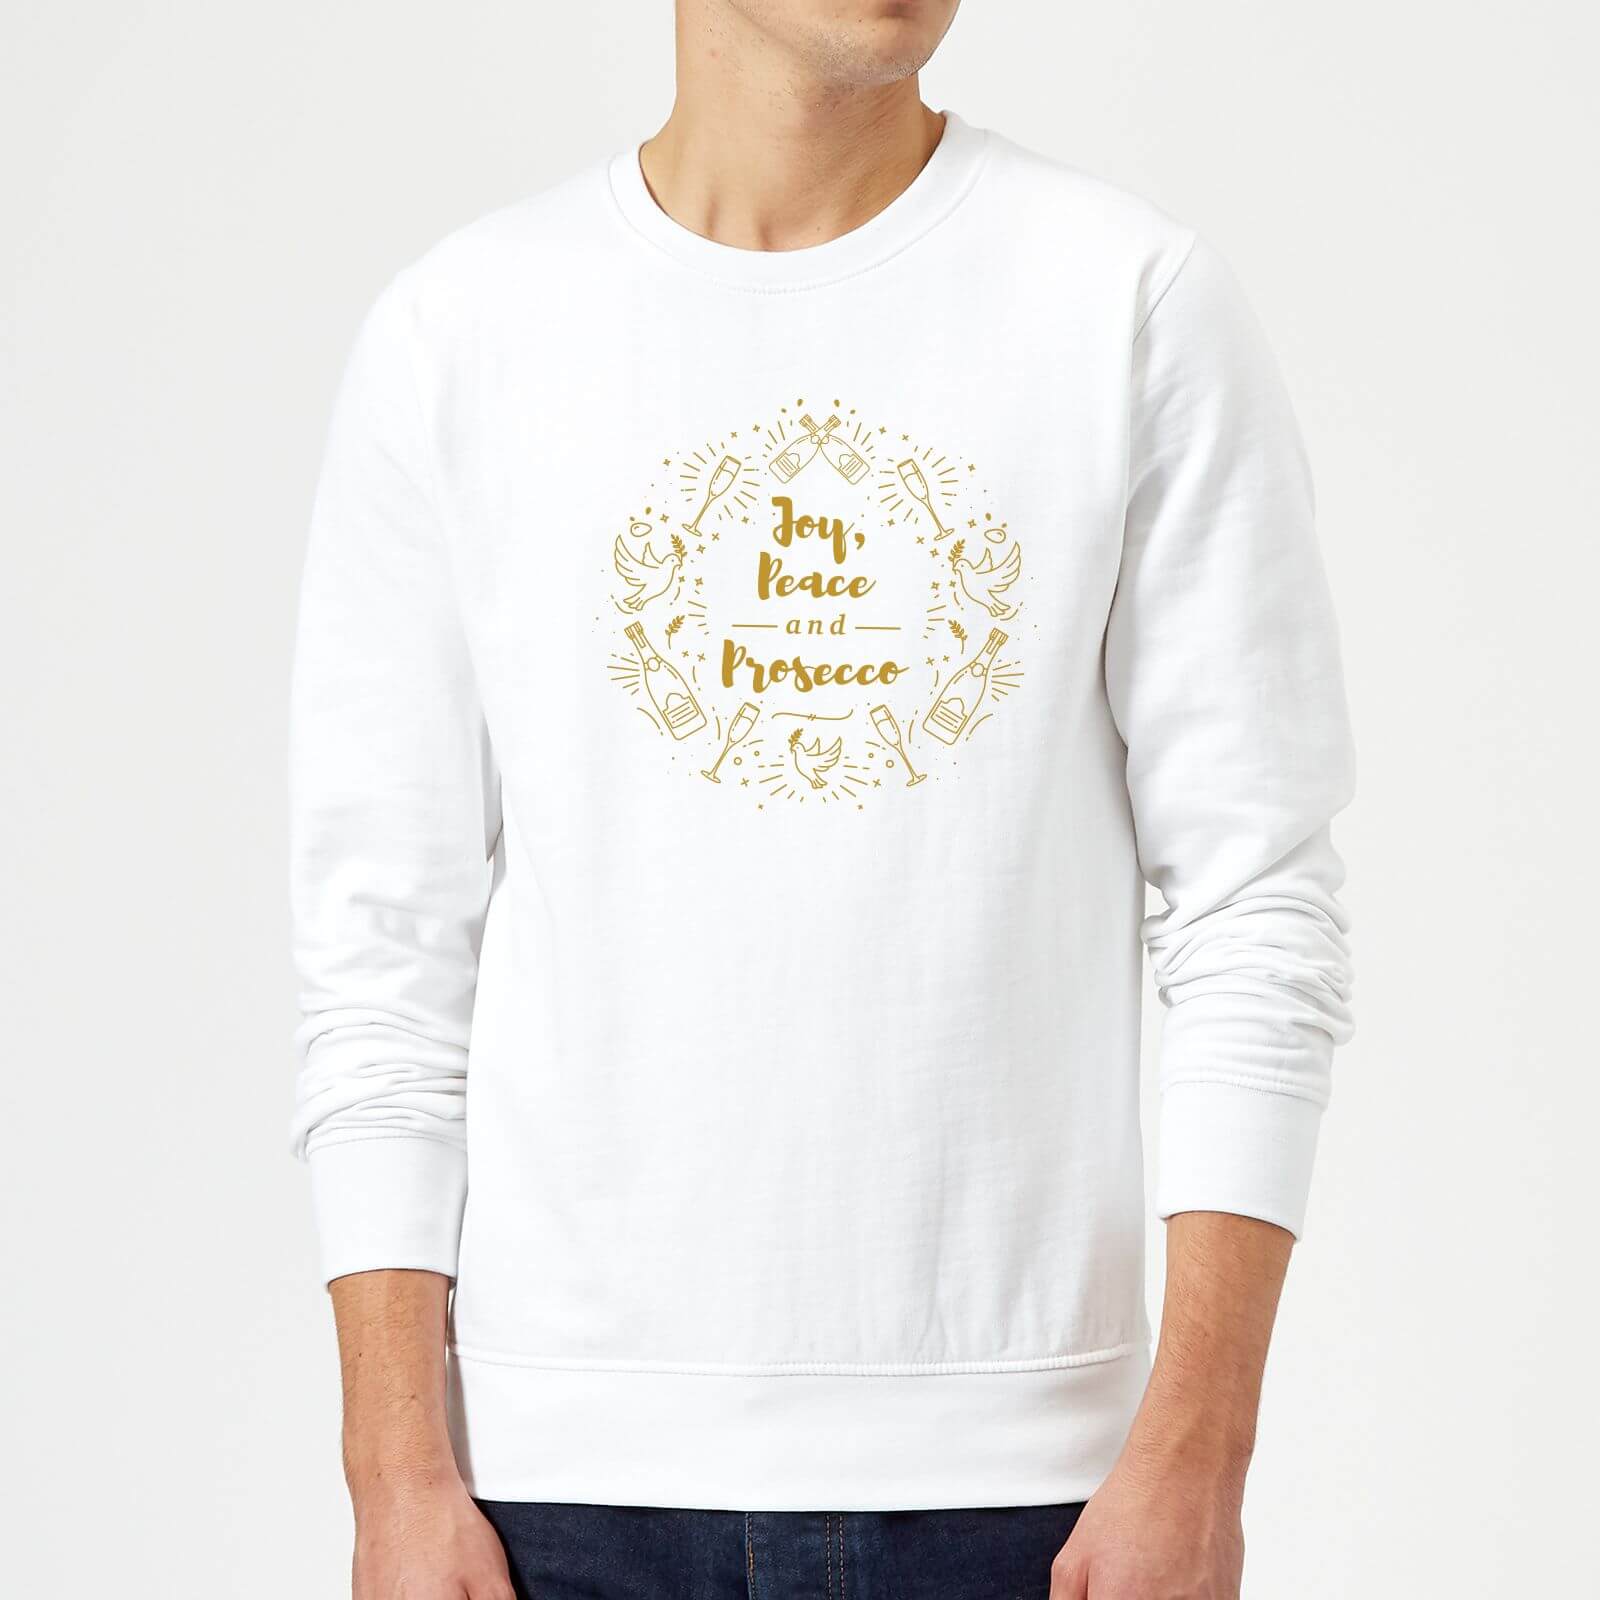 Joy, Peace And Prosecco Sweatshirt - White - S - White